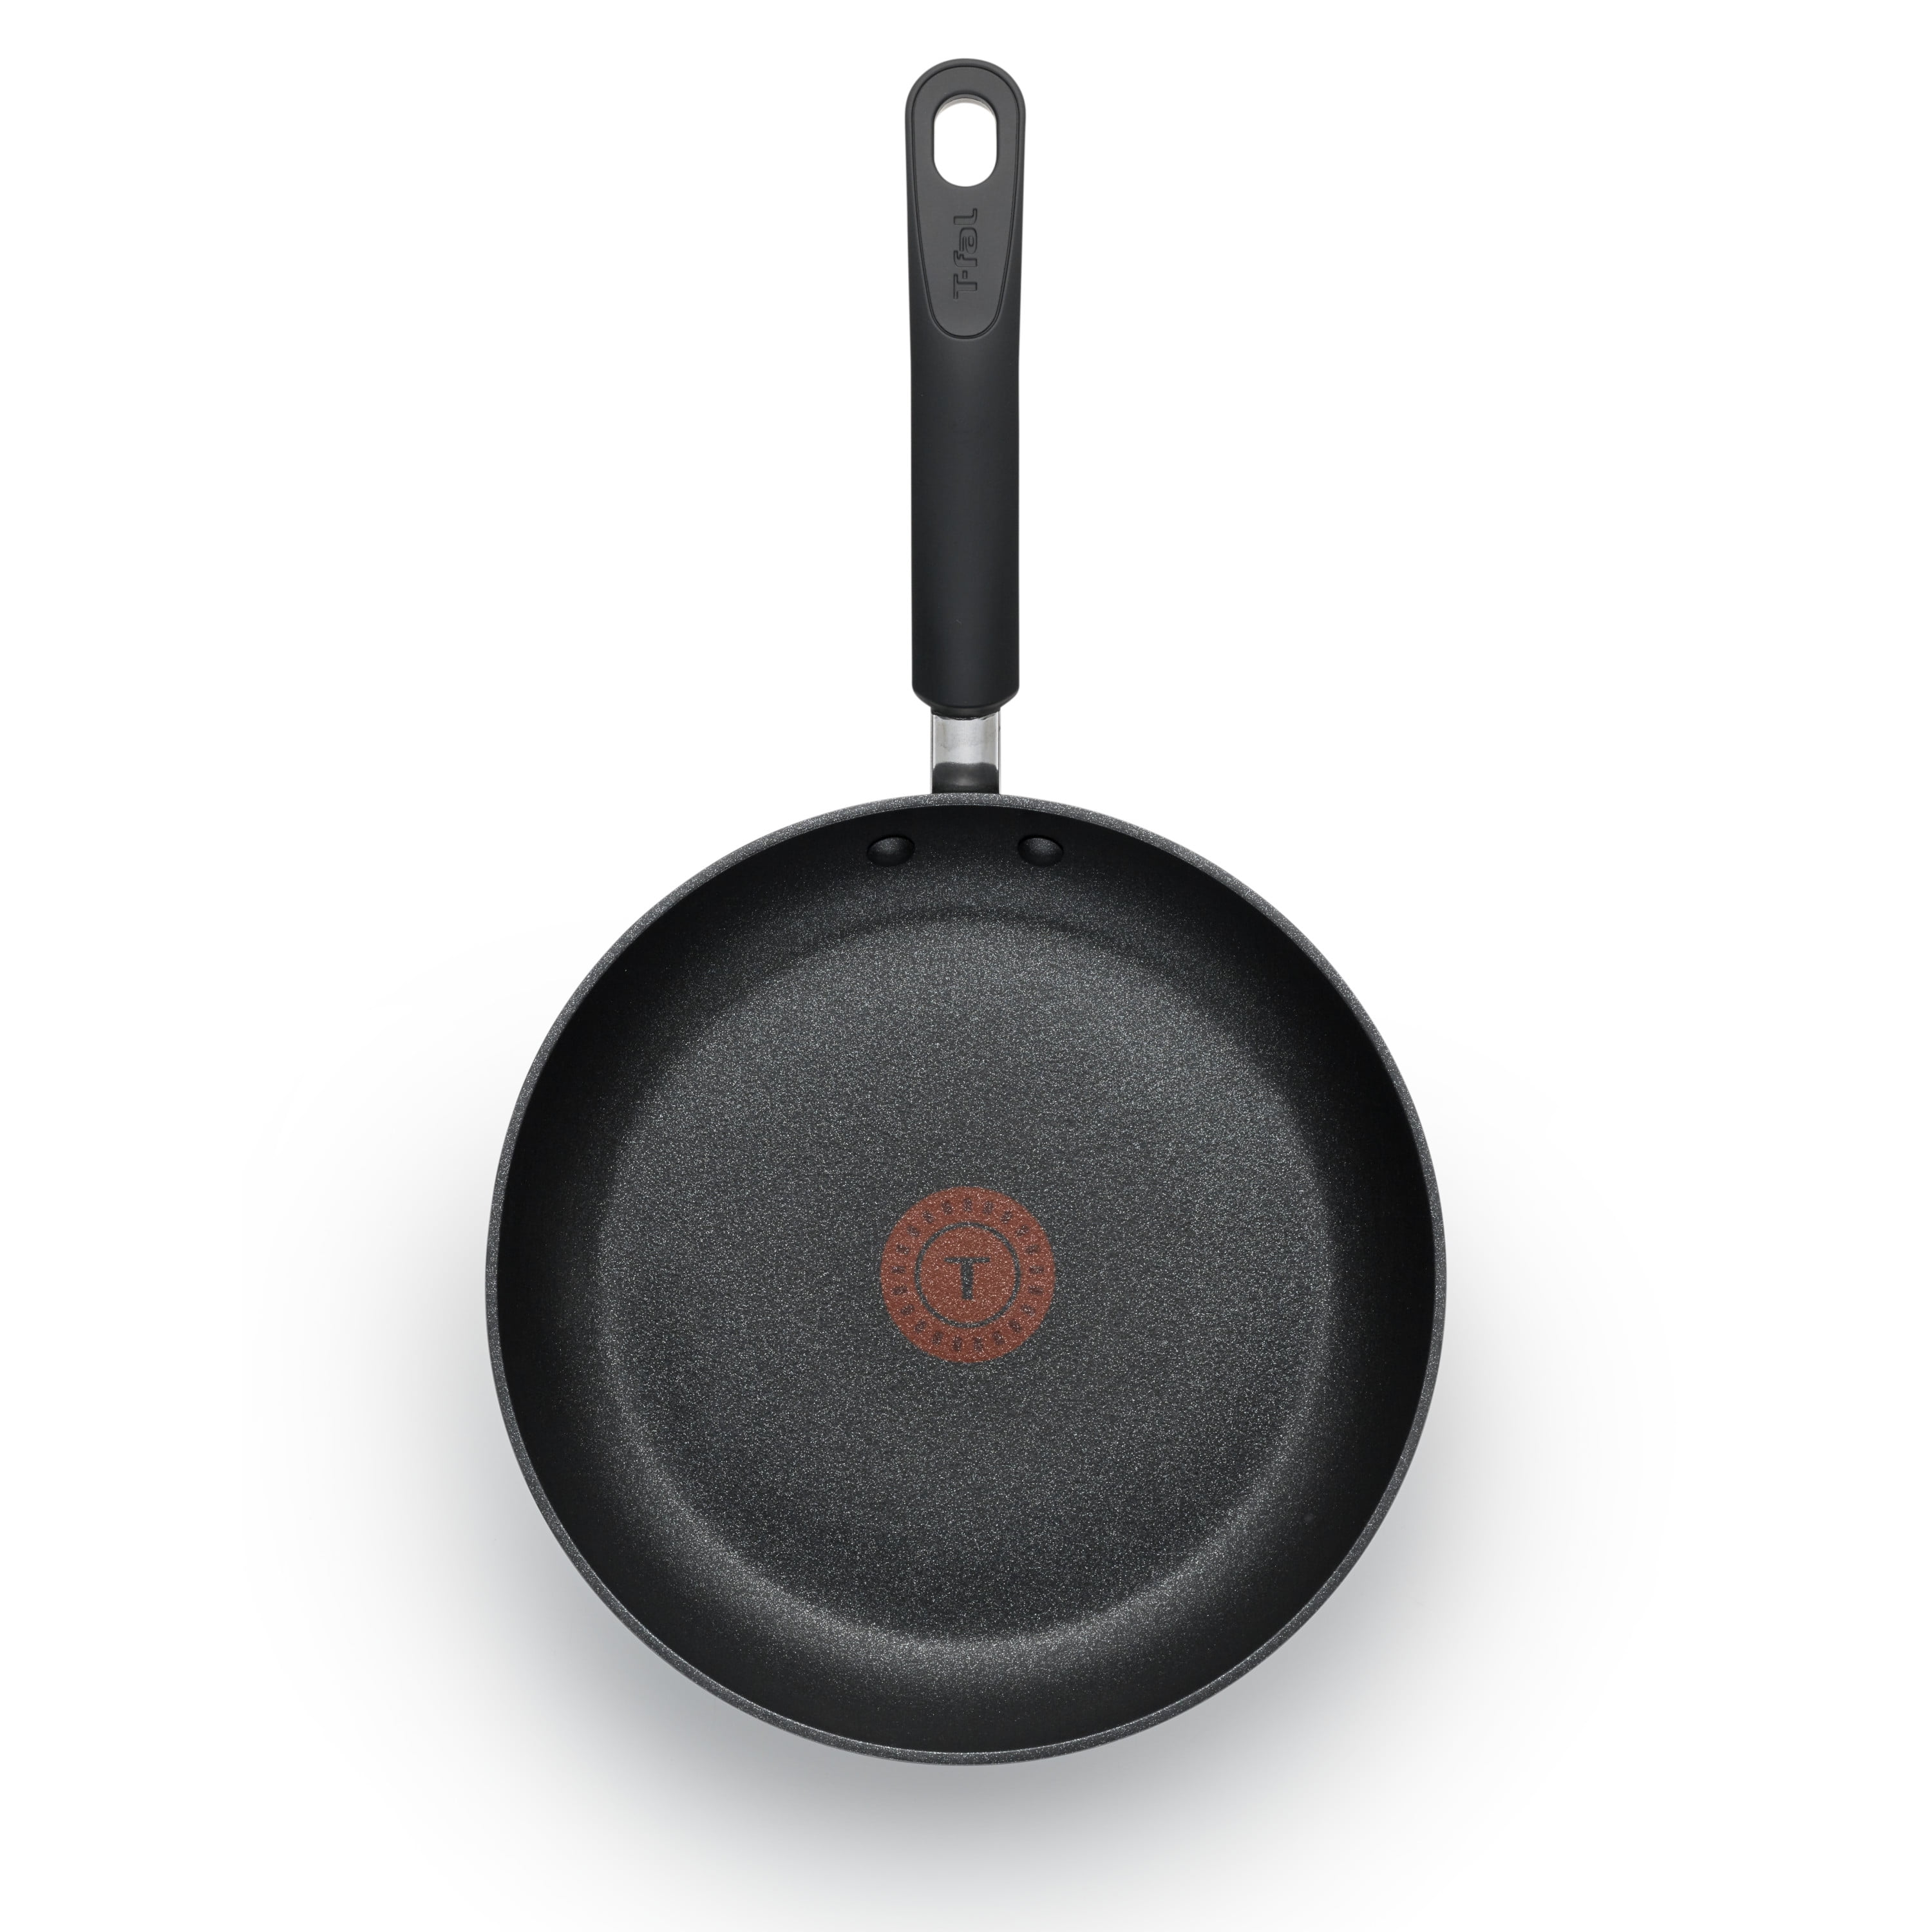 T-FAL T-fal Culinaire Nonstick Cookware, 2 piece Fry Pan Set, 8 & 10.5  inch, Black B058S264